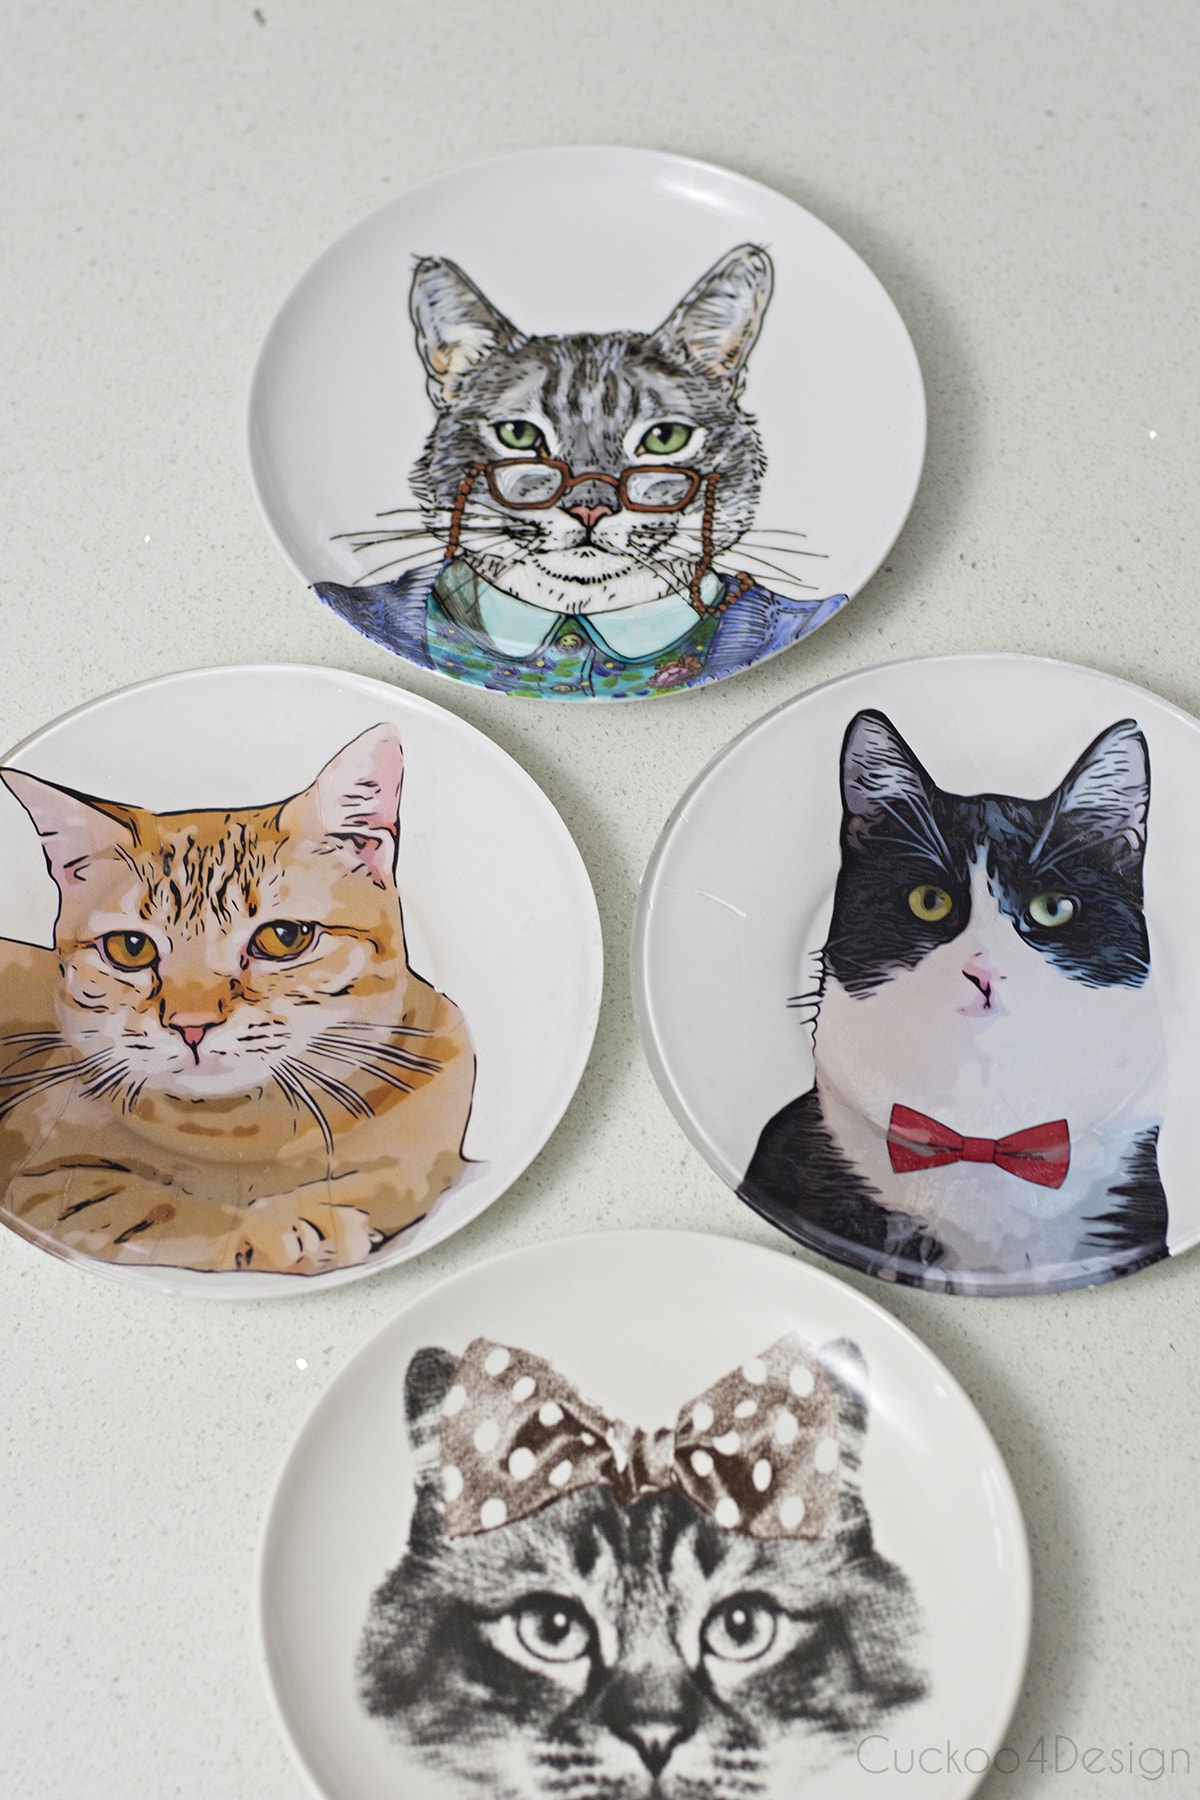 finished custom pet portrait paintings on plates